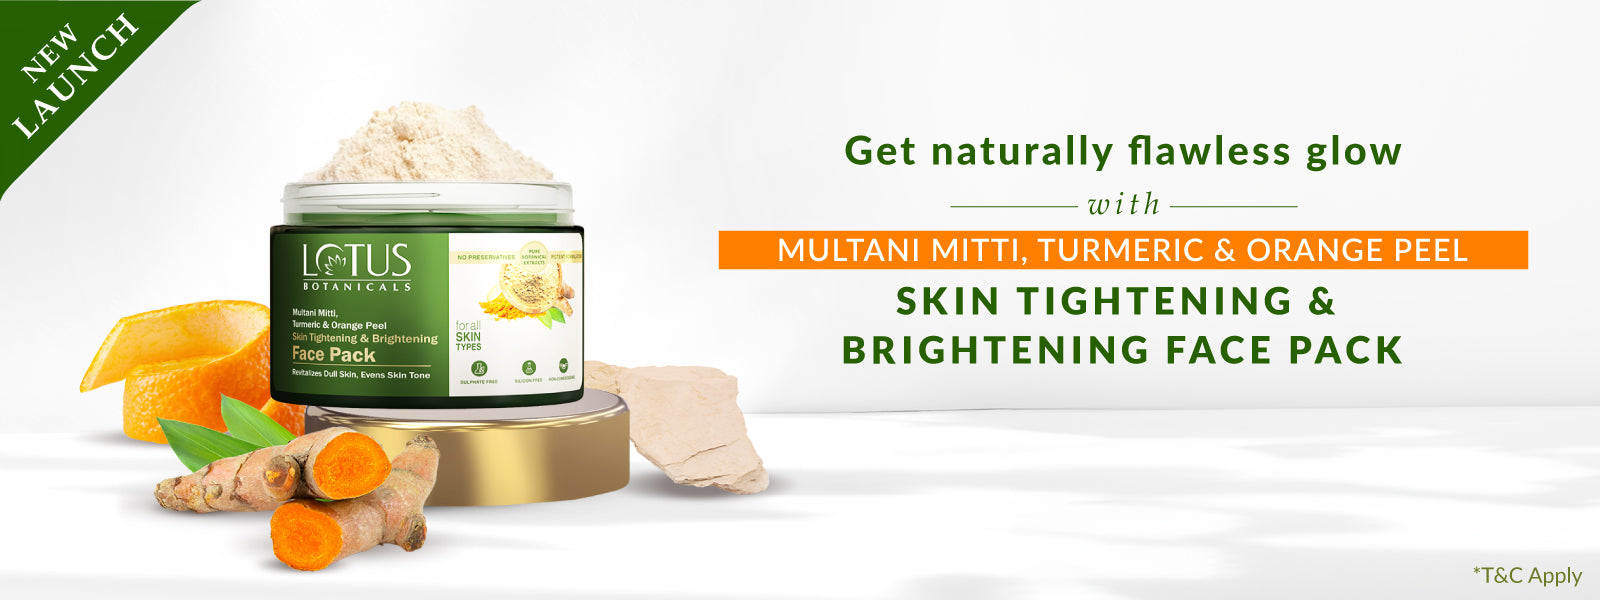 Multani Mitti, Turmeric & Orange Peel Skin Tightening & Brightening Face Pack